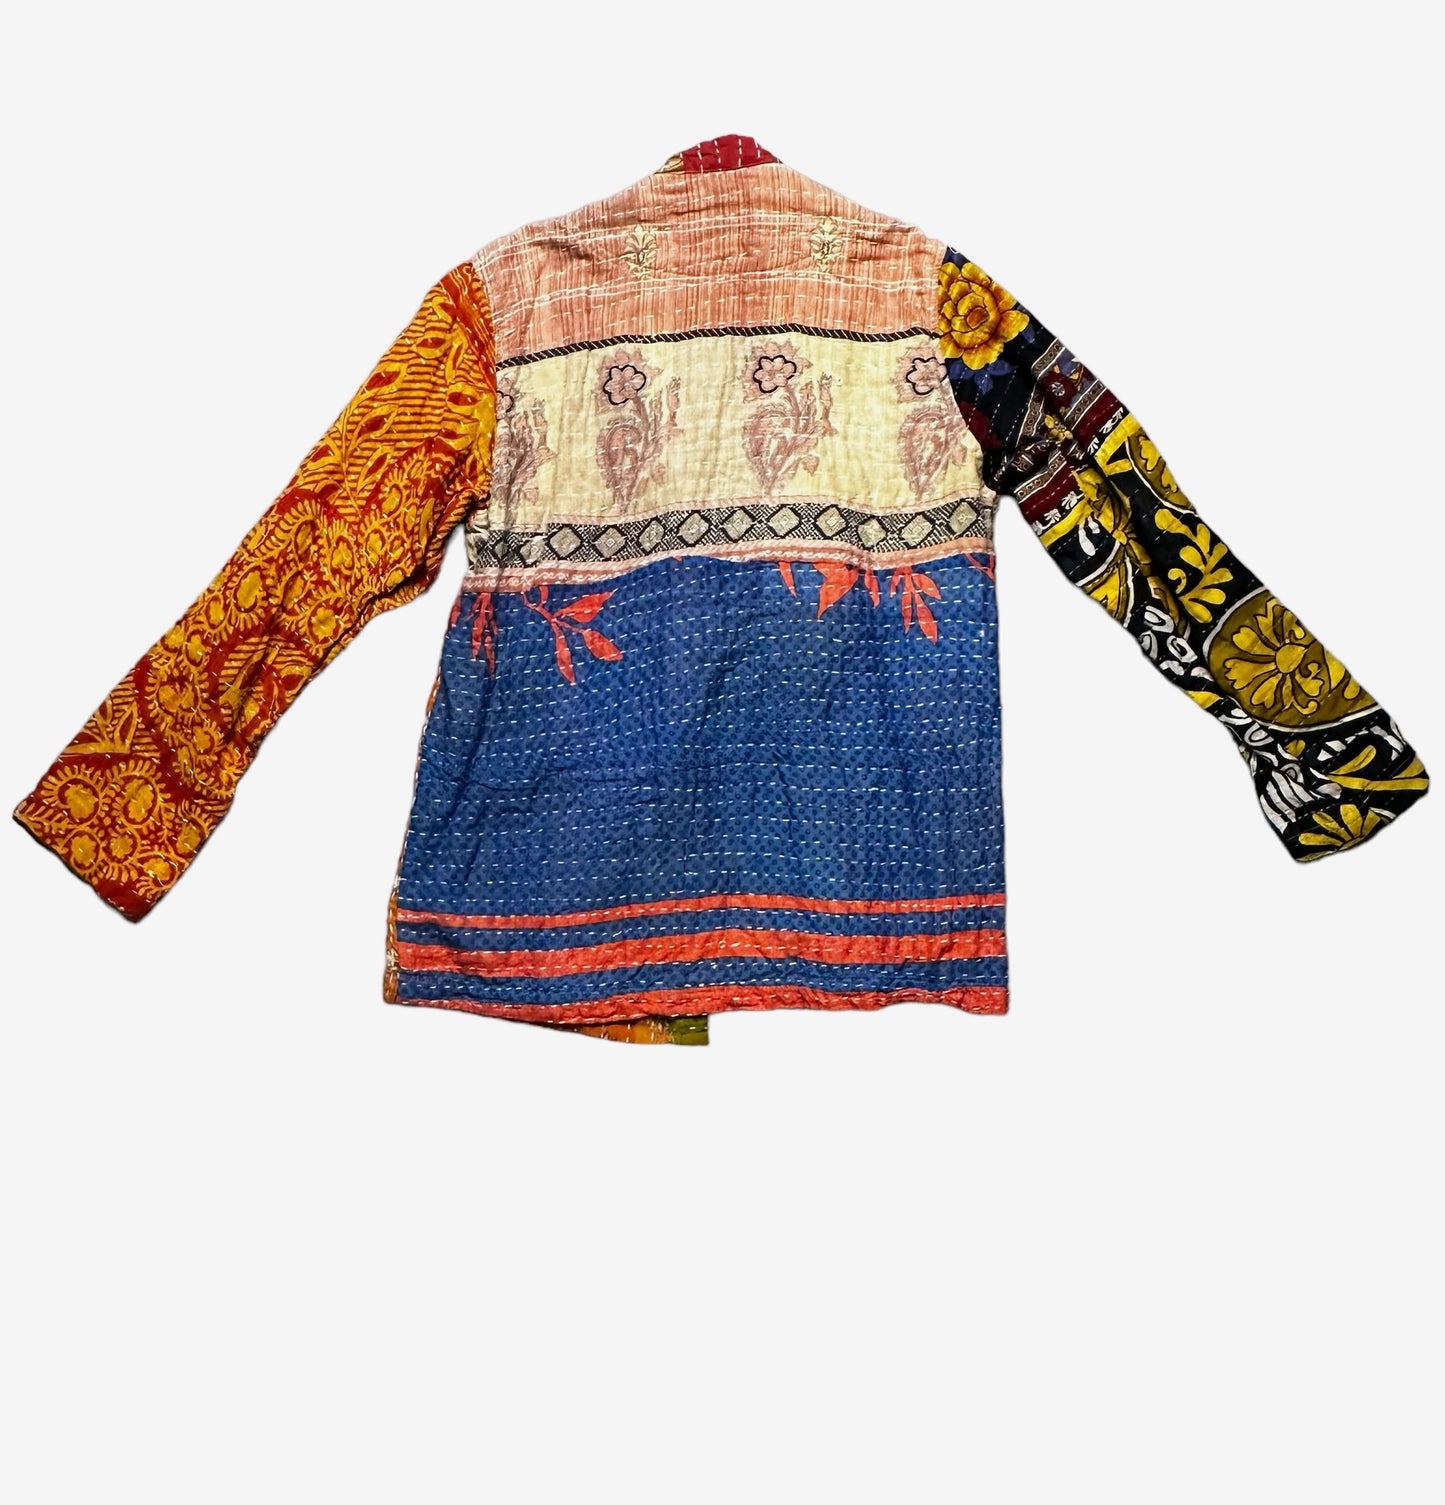 Multicolor Patchwork Jacket - L